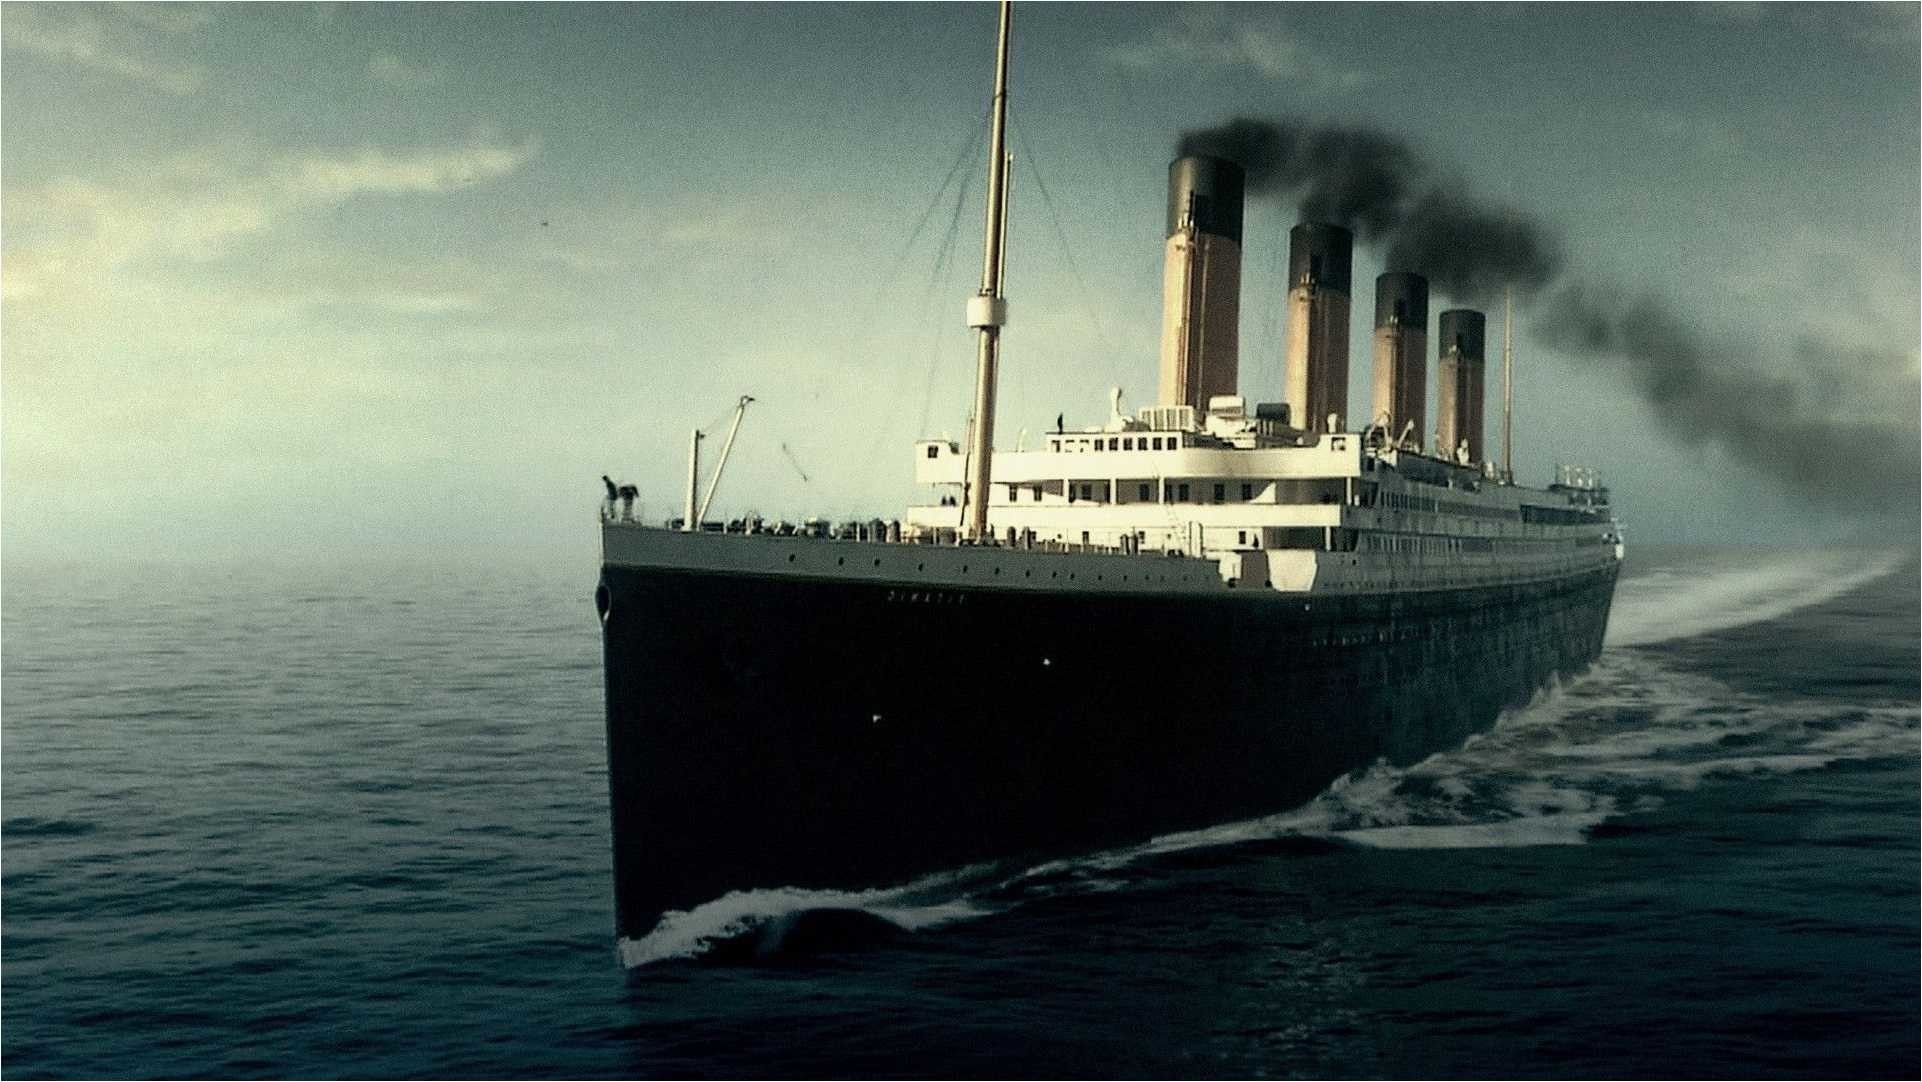 free for mac download Titanic